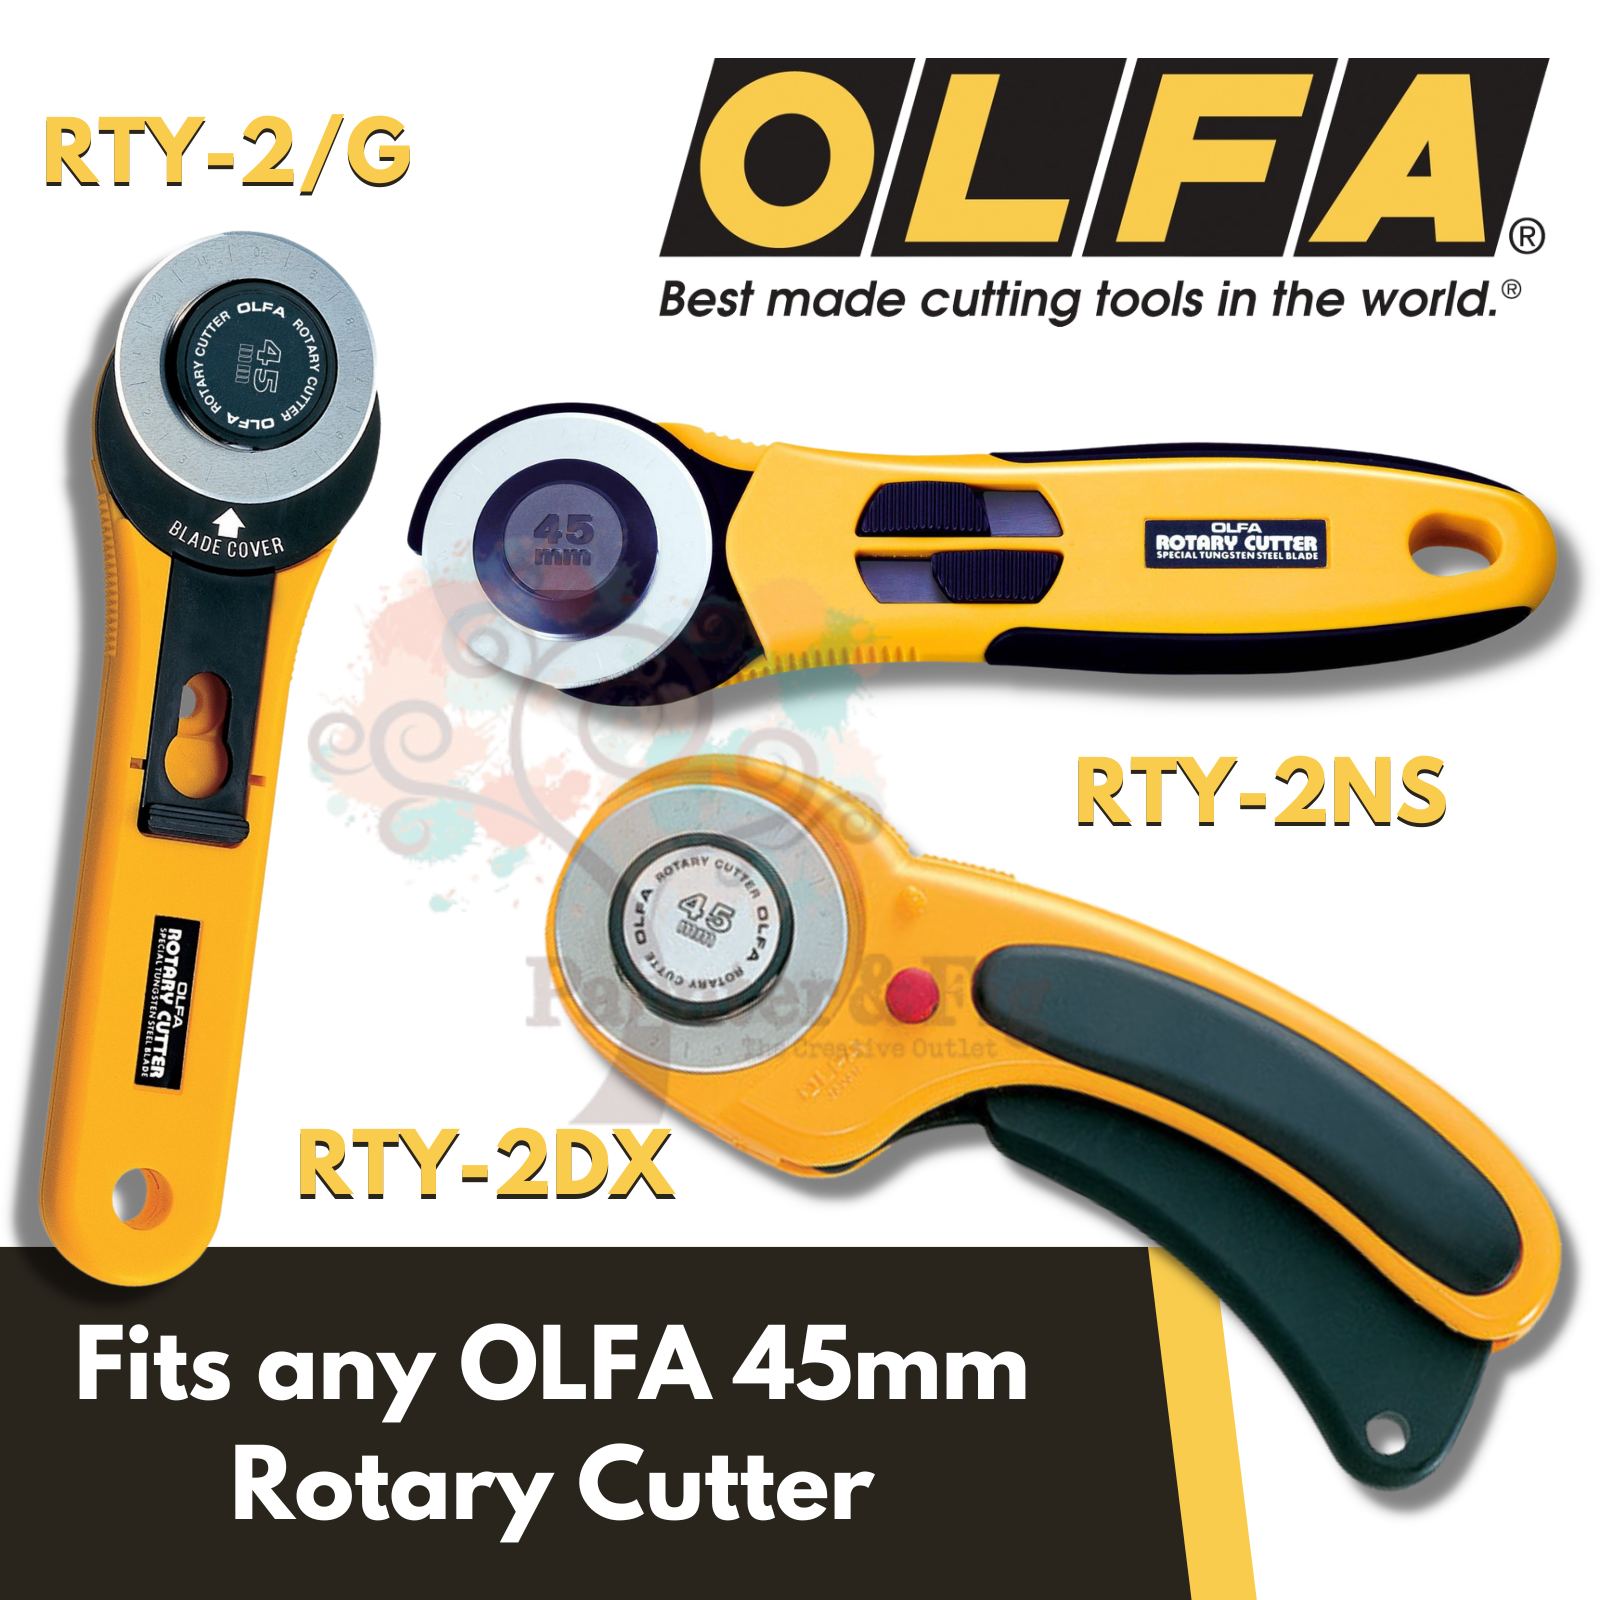 Olfa 45mm Rotary Cutter Replacement Blades x 5 - Tungsten Steel, Razor Edge